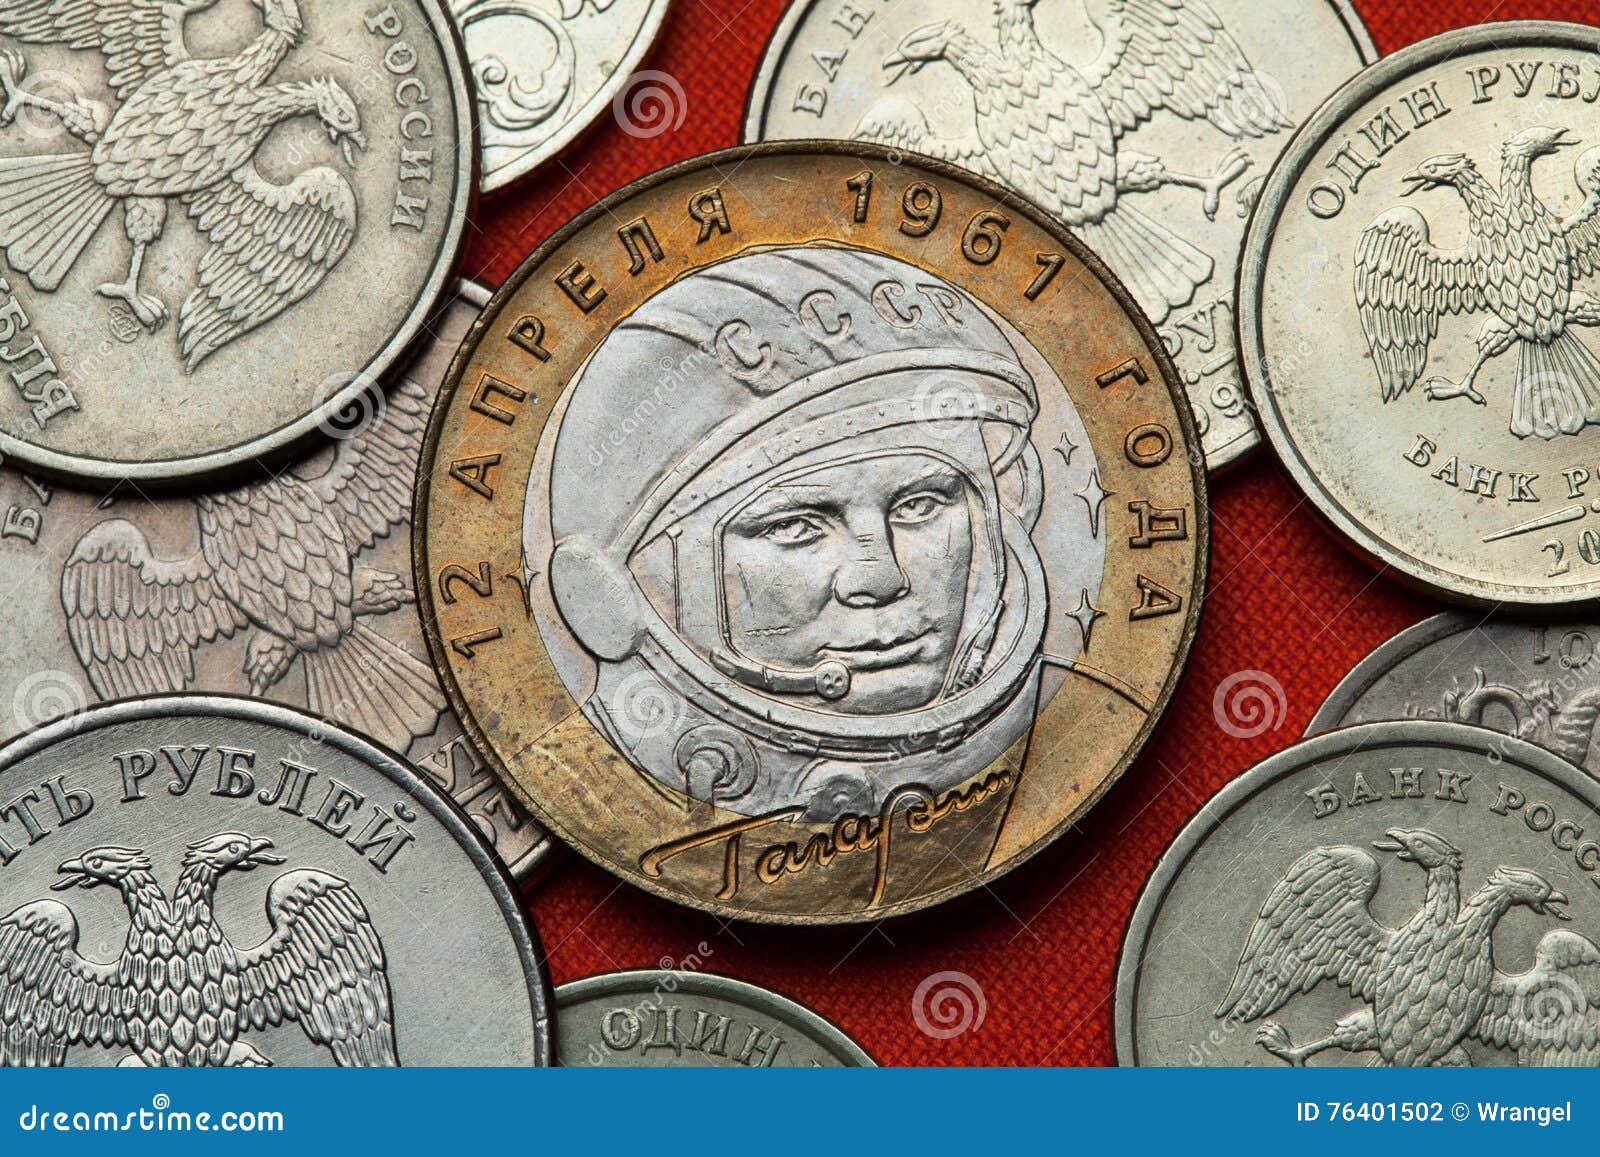 coins of russia. yuri gagarin